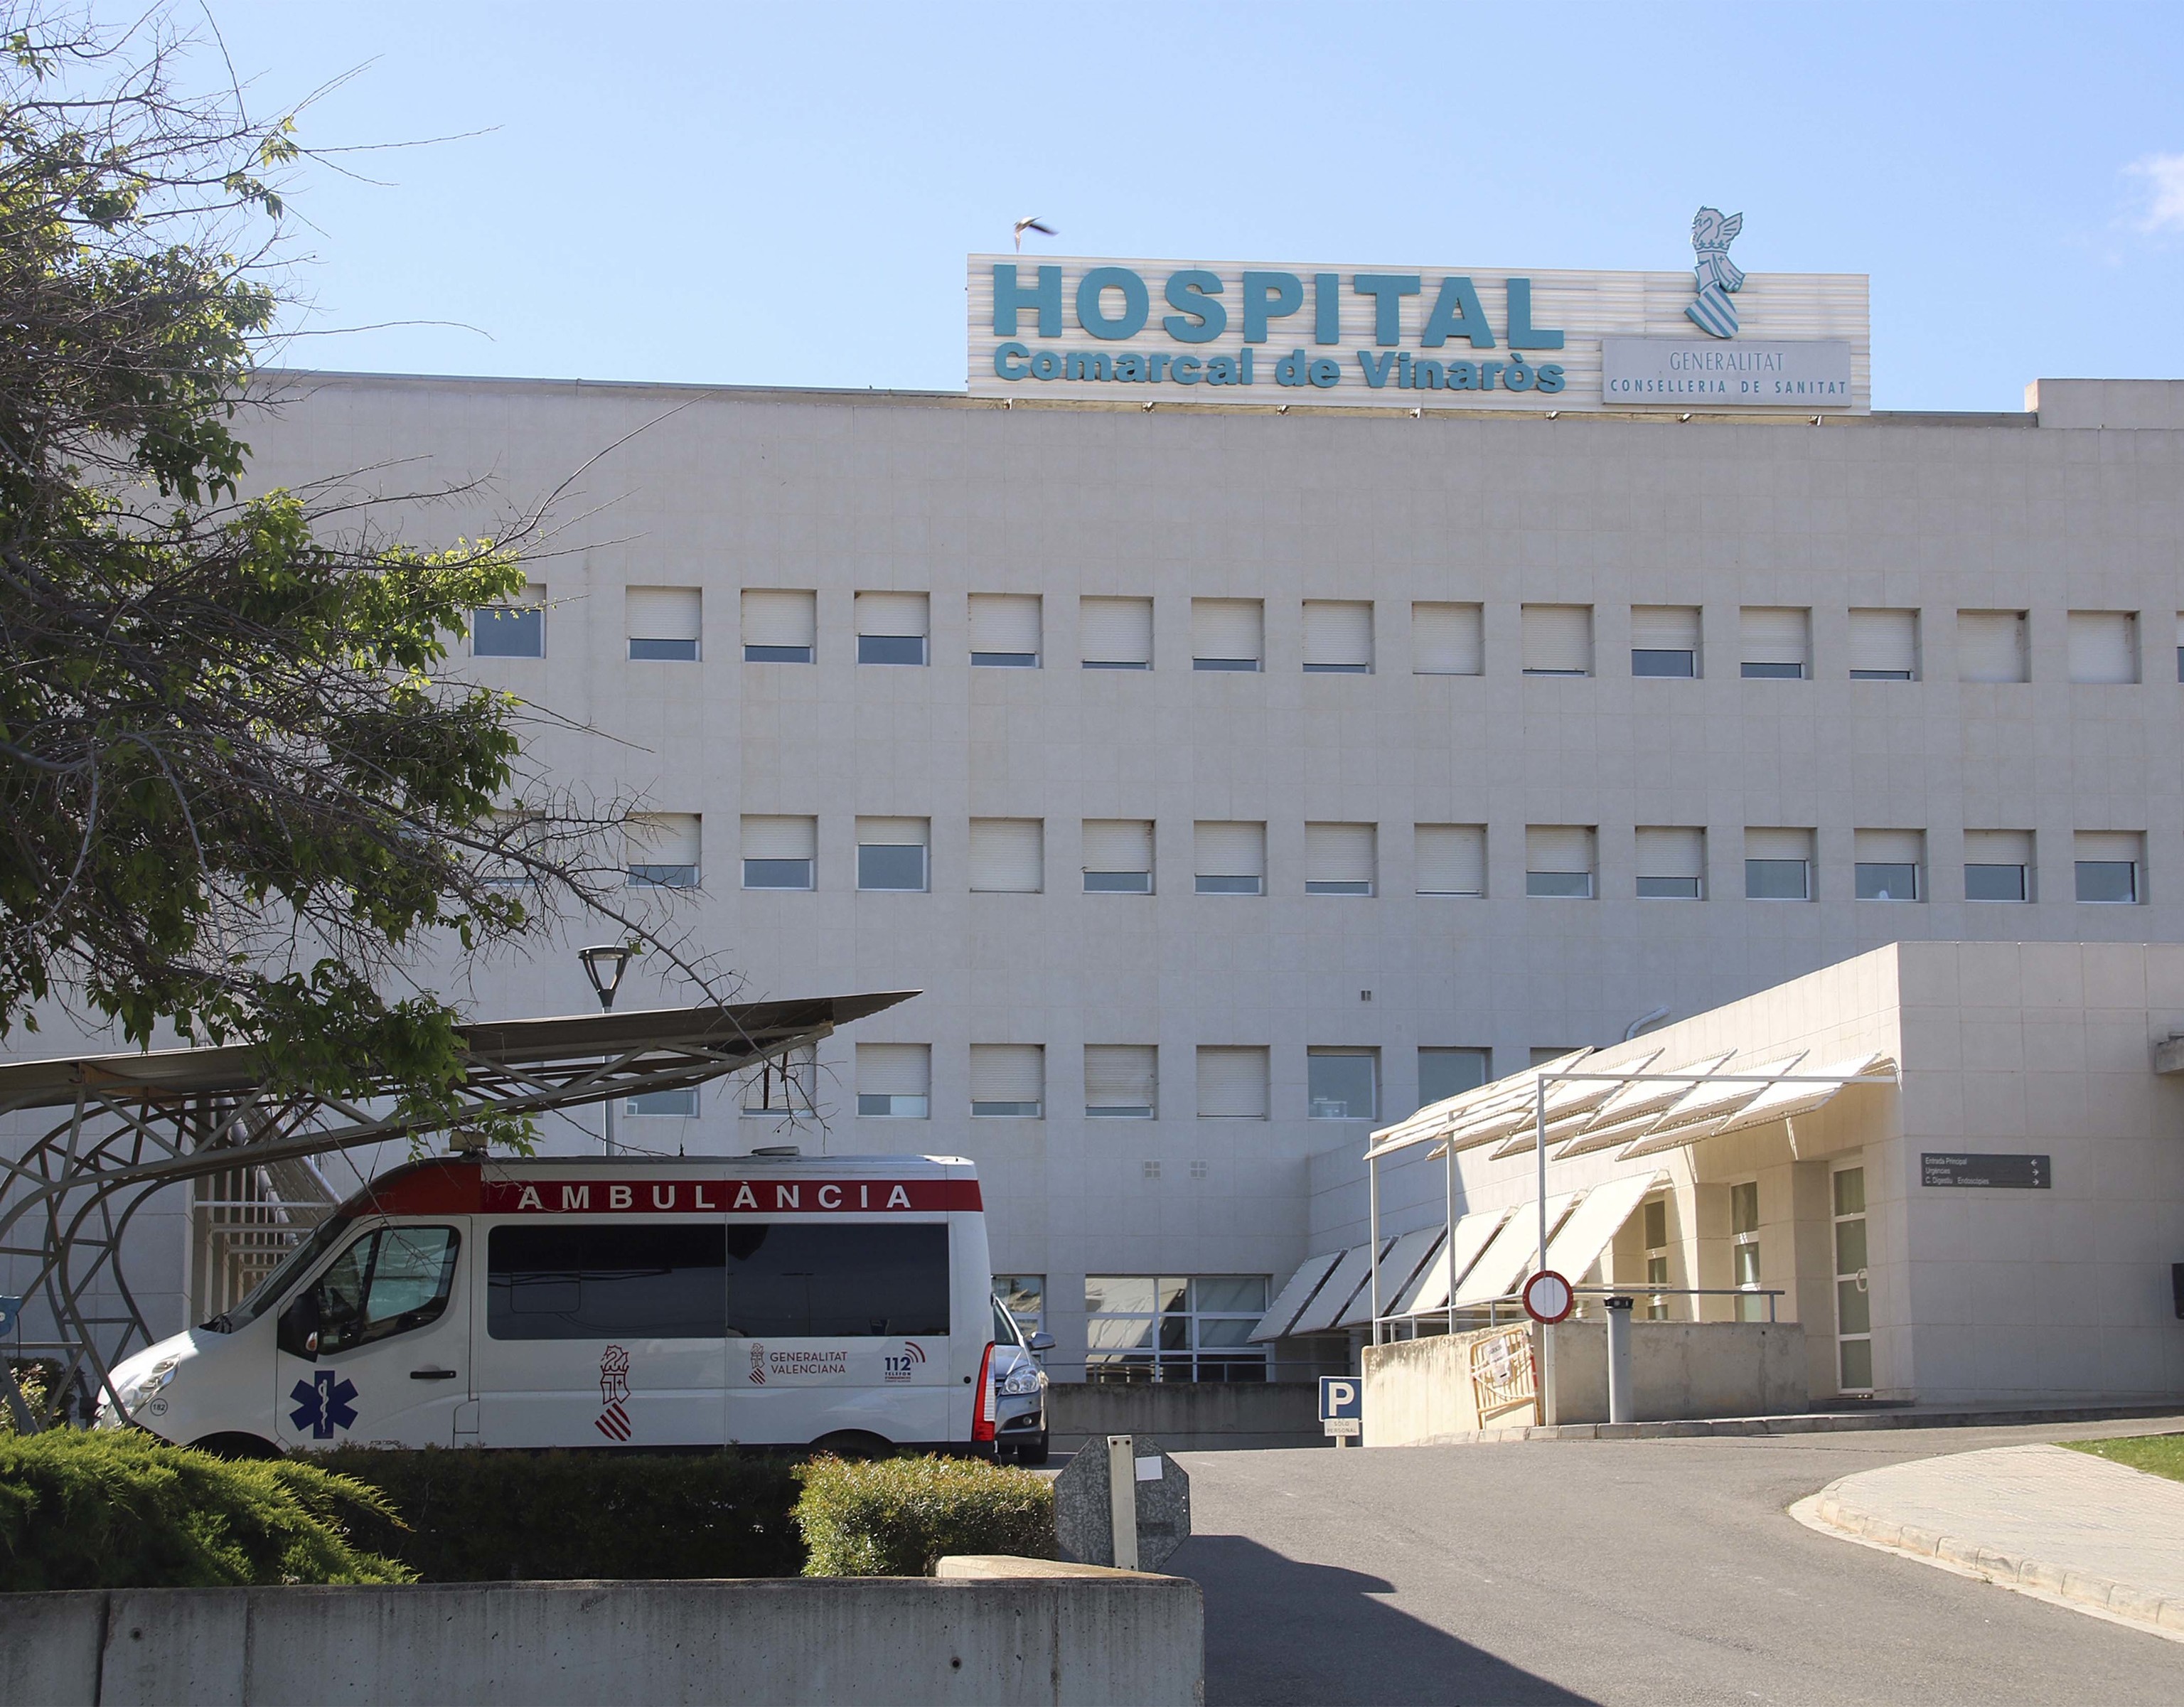 Hospital de Vinaròs.